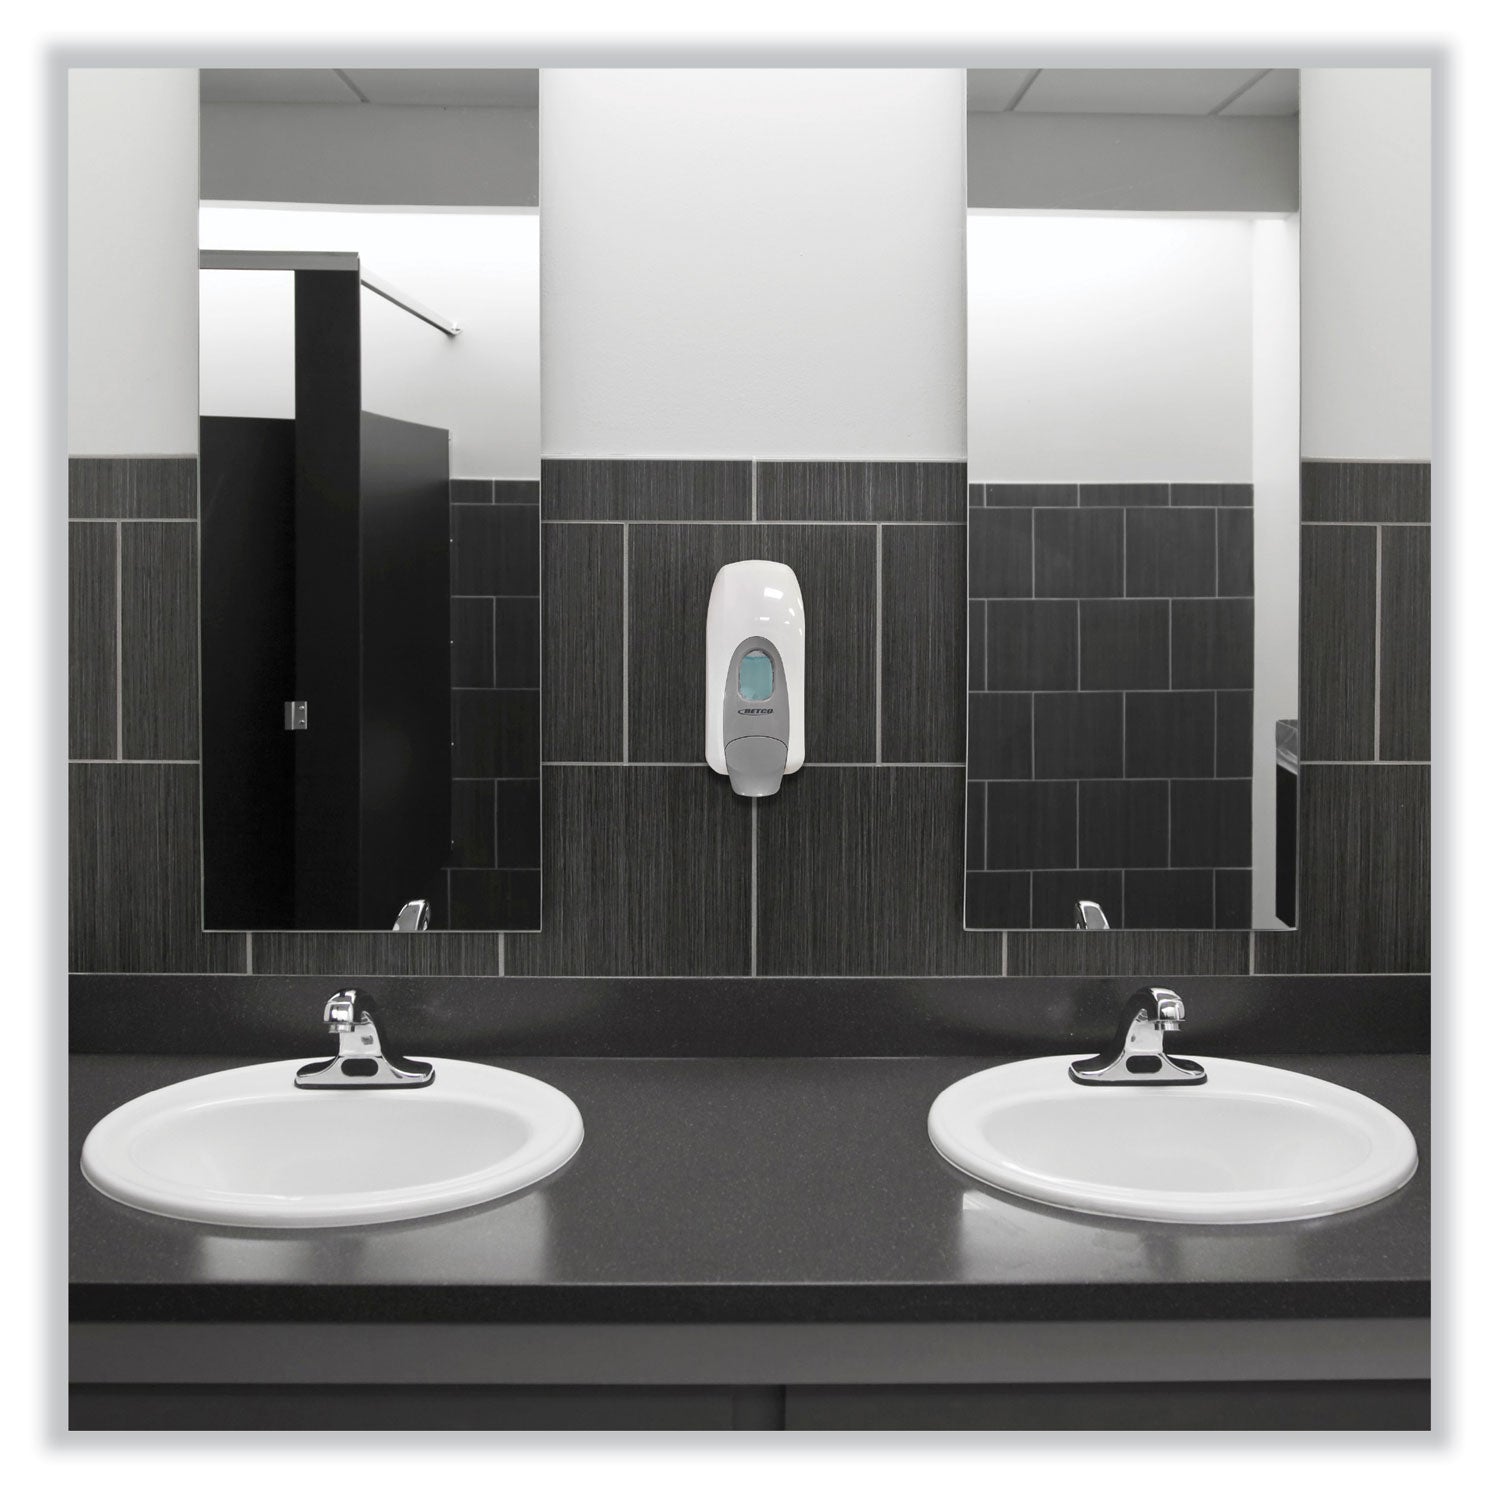 Betco Clario Manual Skin Care Foam Dispenser - Manual - 1.06 quart Capacity - Hygienic, Refillable, Site Window, Durable - White - 12 / Carton - 7